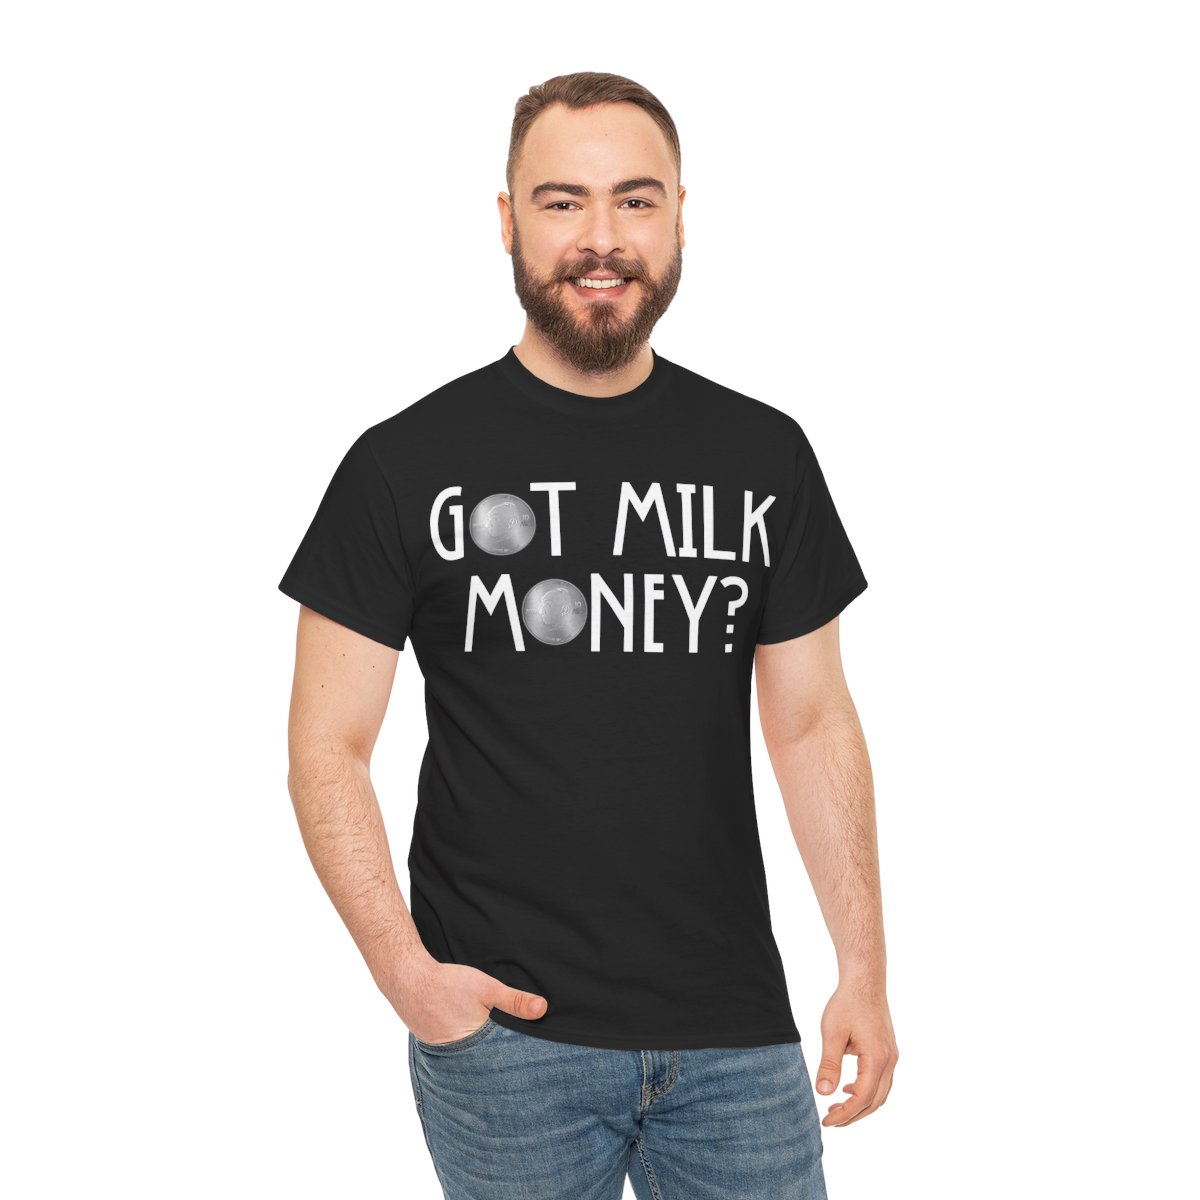 Got Milk Money? product thumbnail image